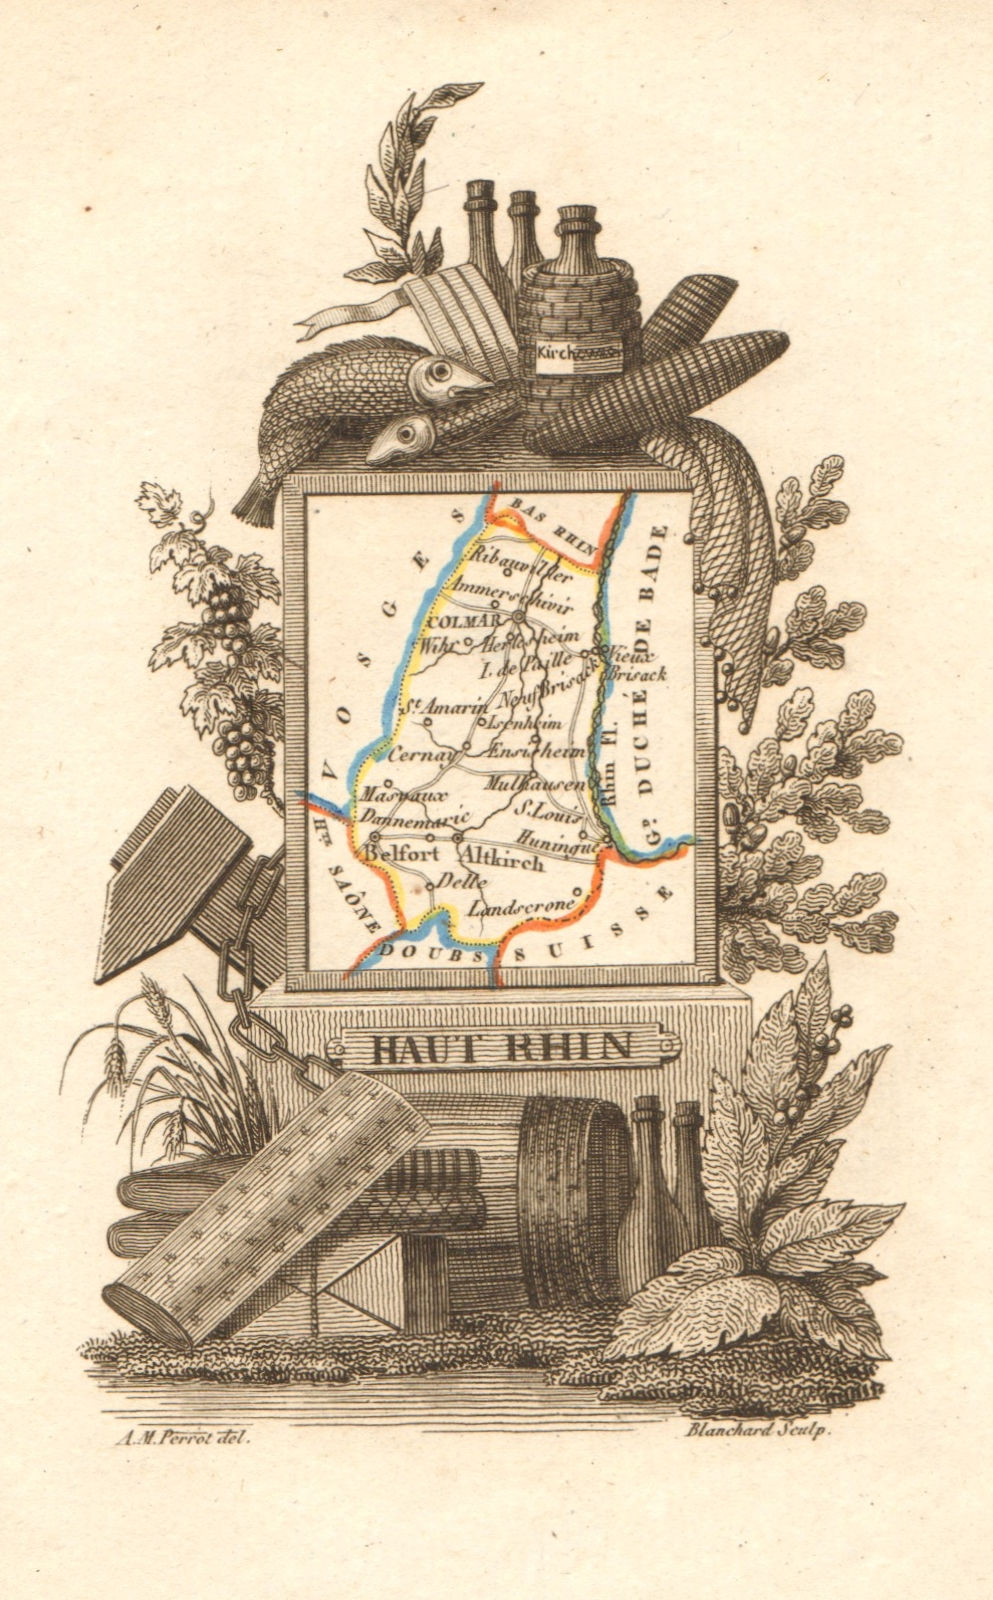 Associate Product HAUT-RHIN département. Scarce antique map/carte by A.M. PERROT 1823 old